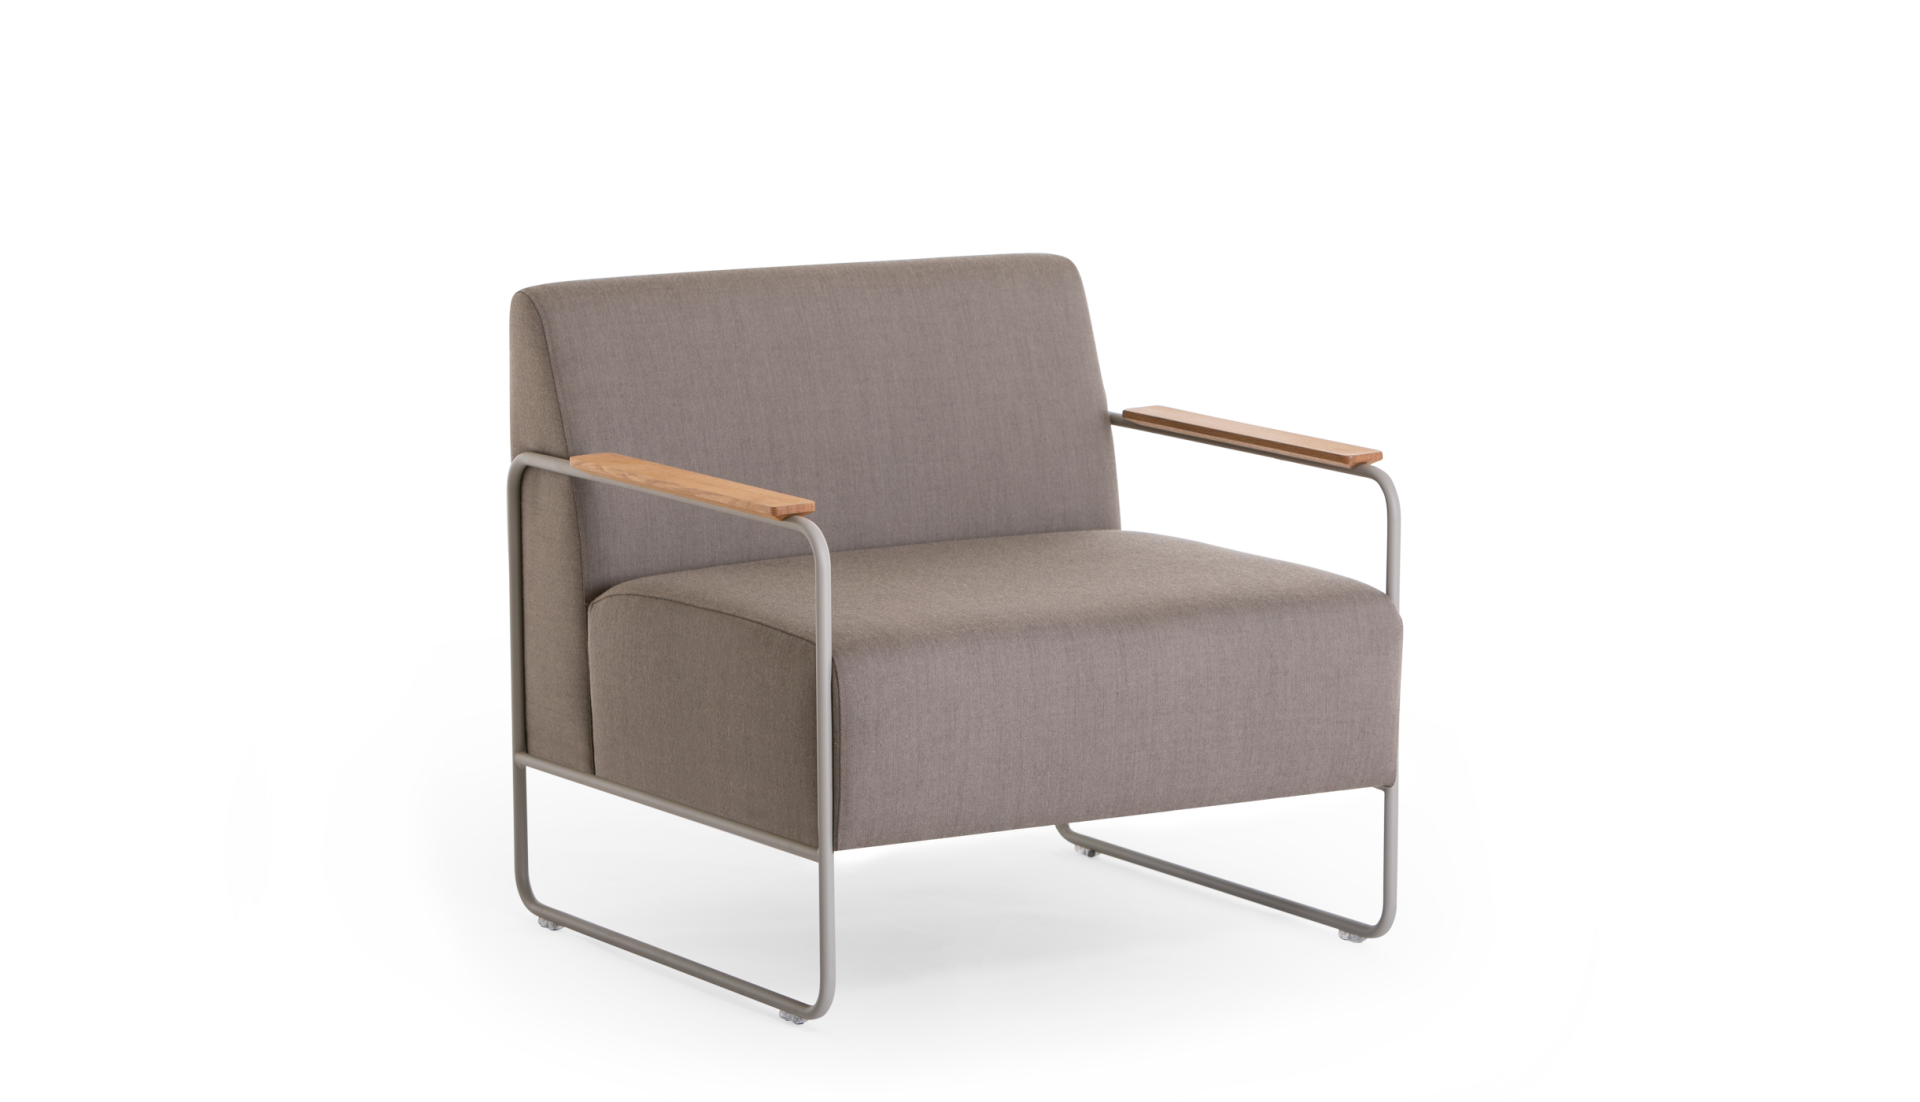 Dula seat with wooden armrests - Vergés